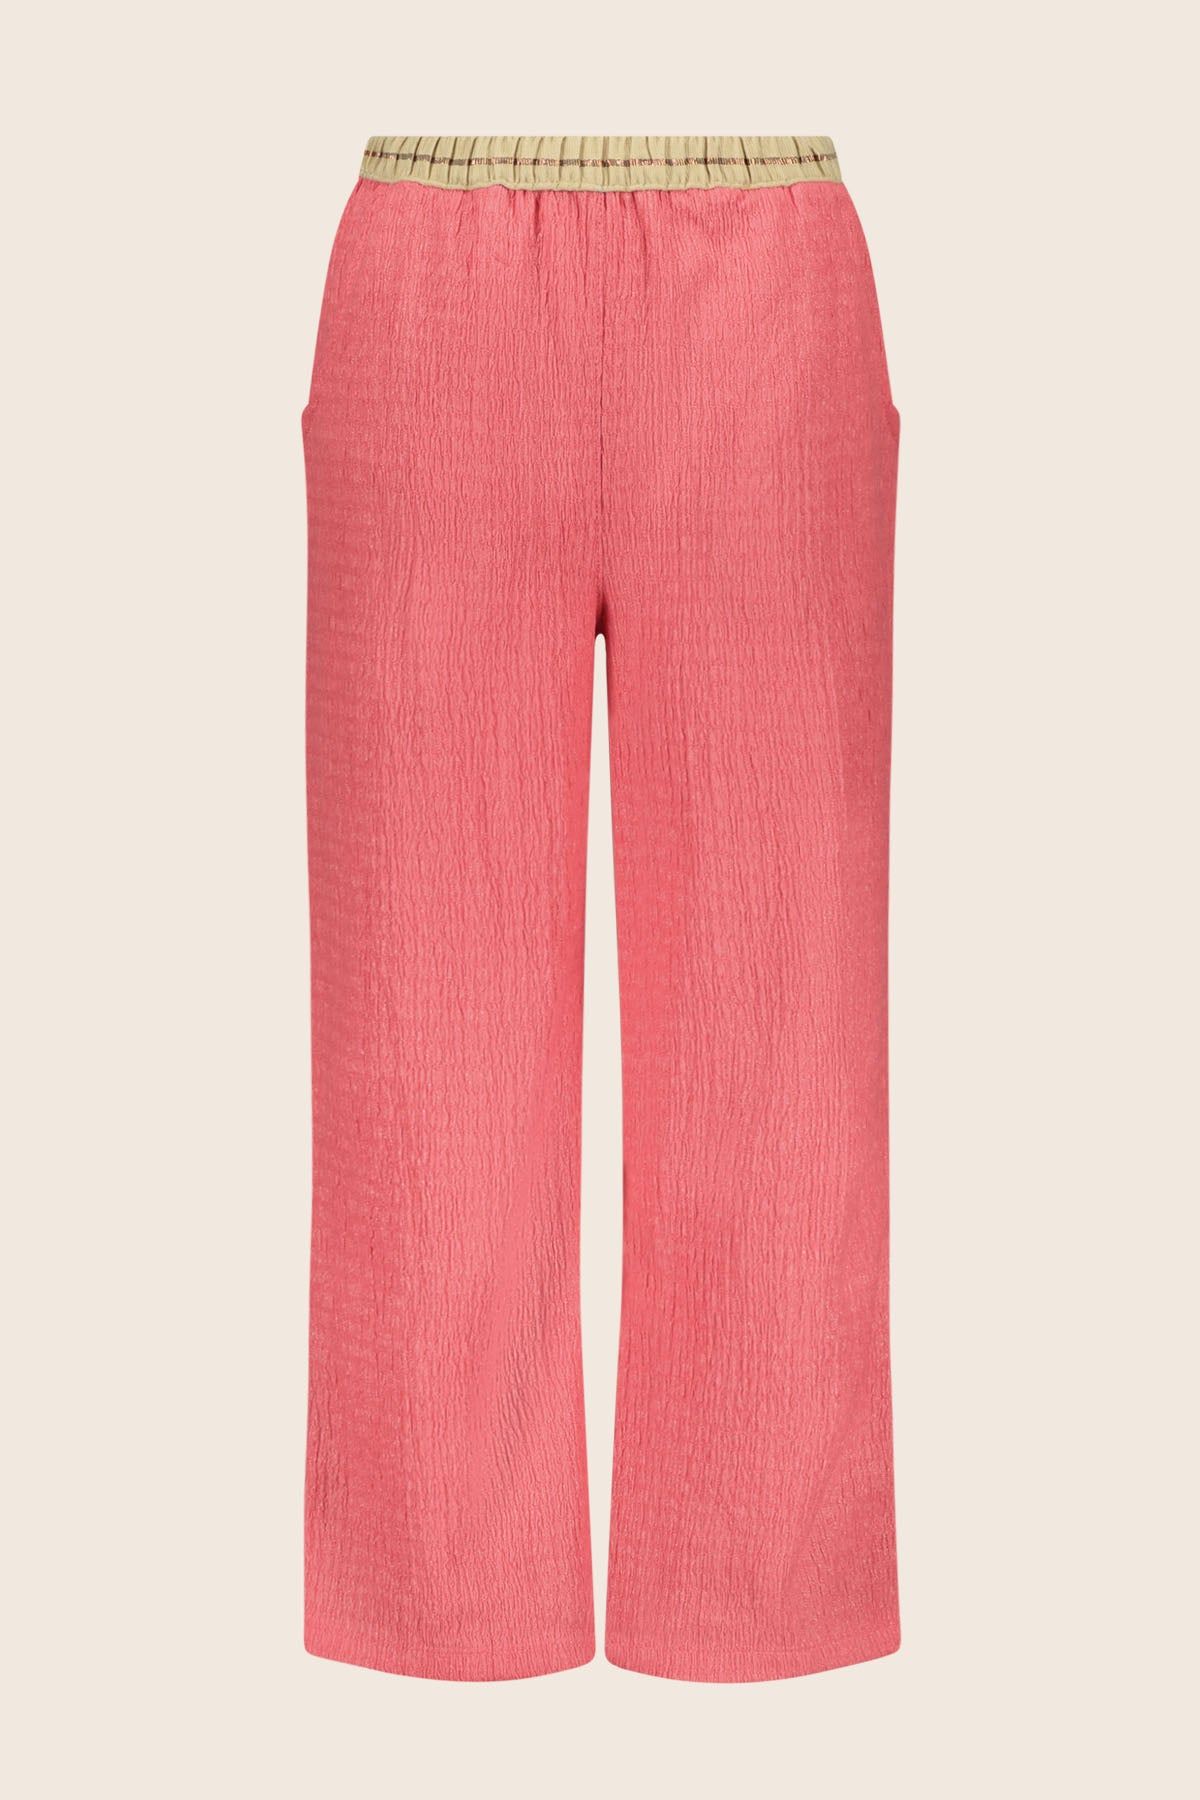 Broek Trouser PAM pink